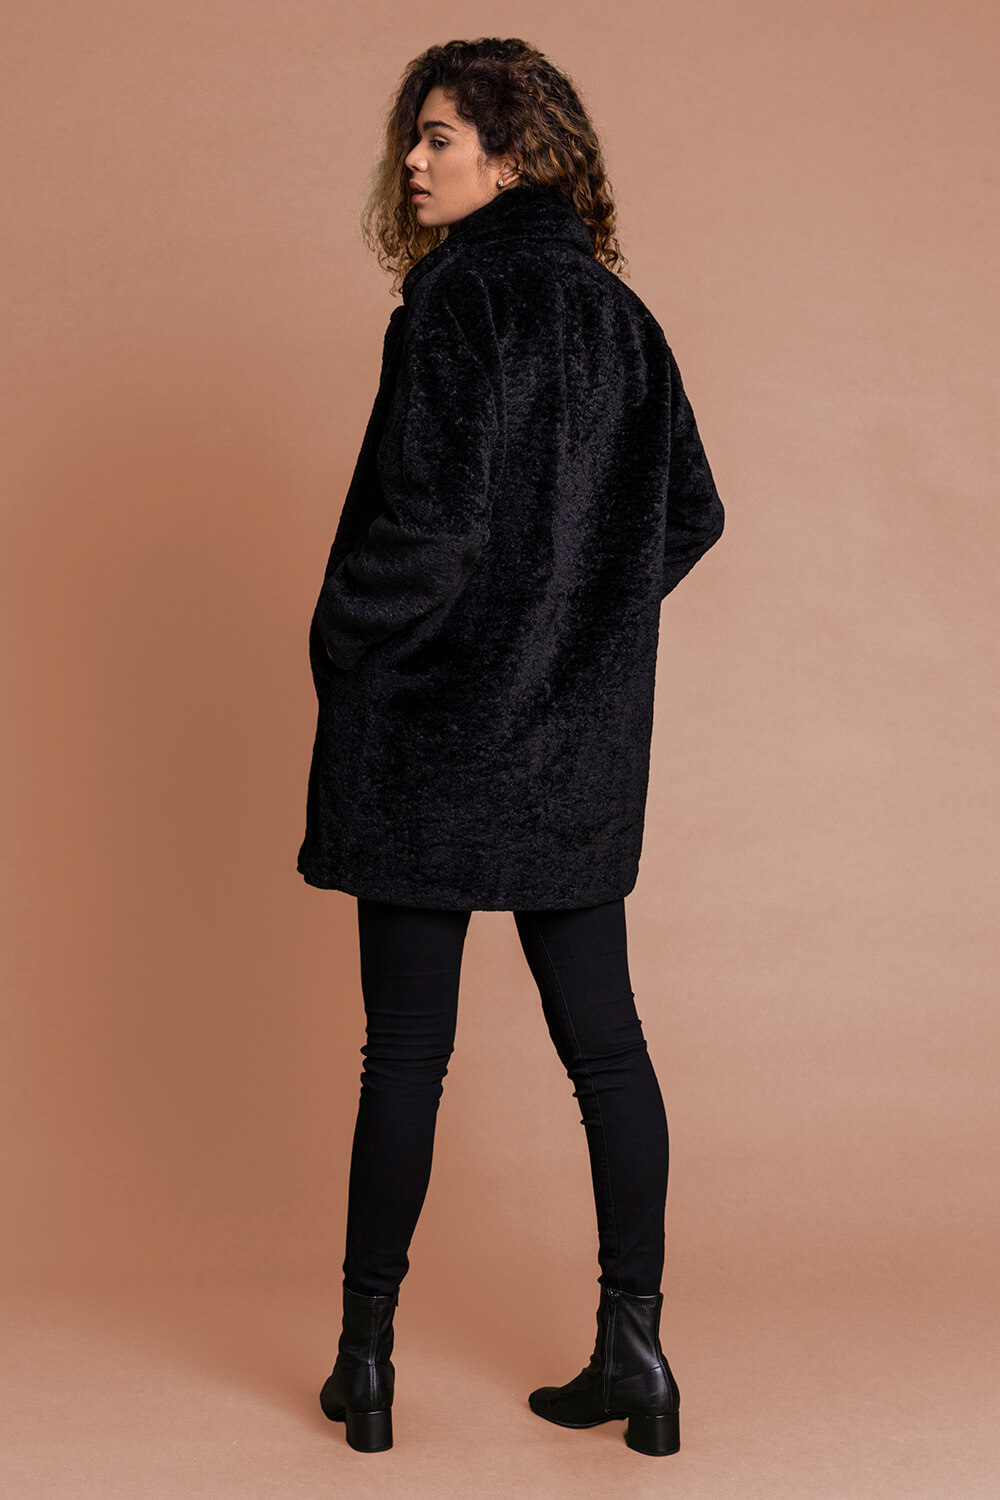 Black Textured Faux Fur Teddy Coat, Image 2 of 5